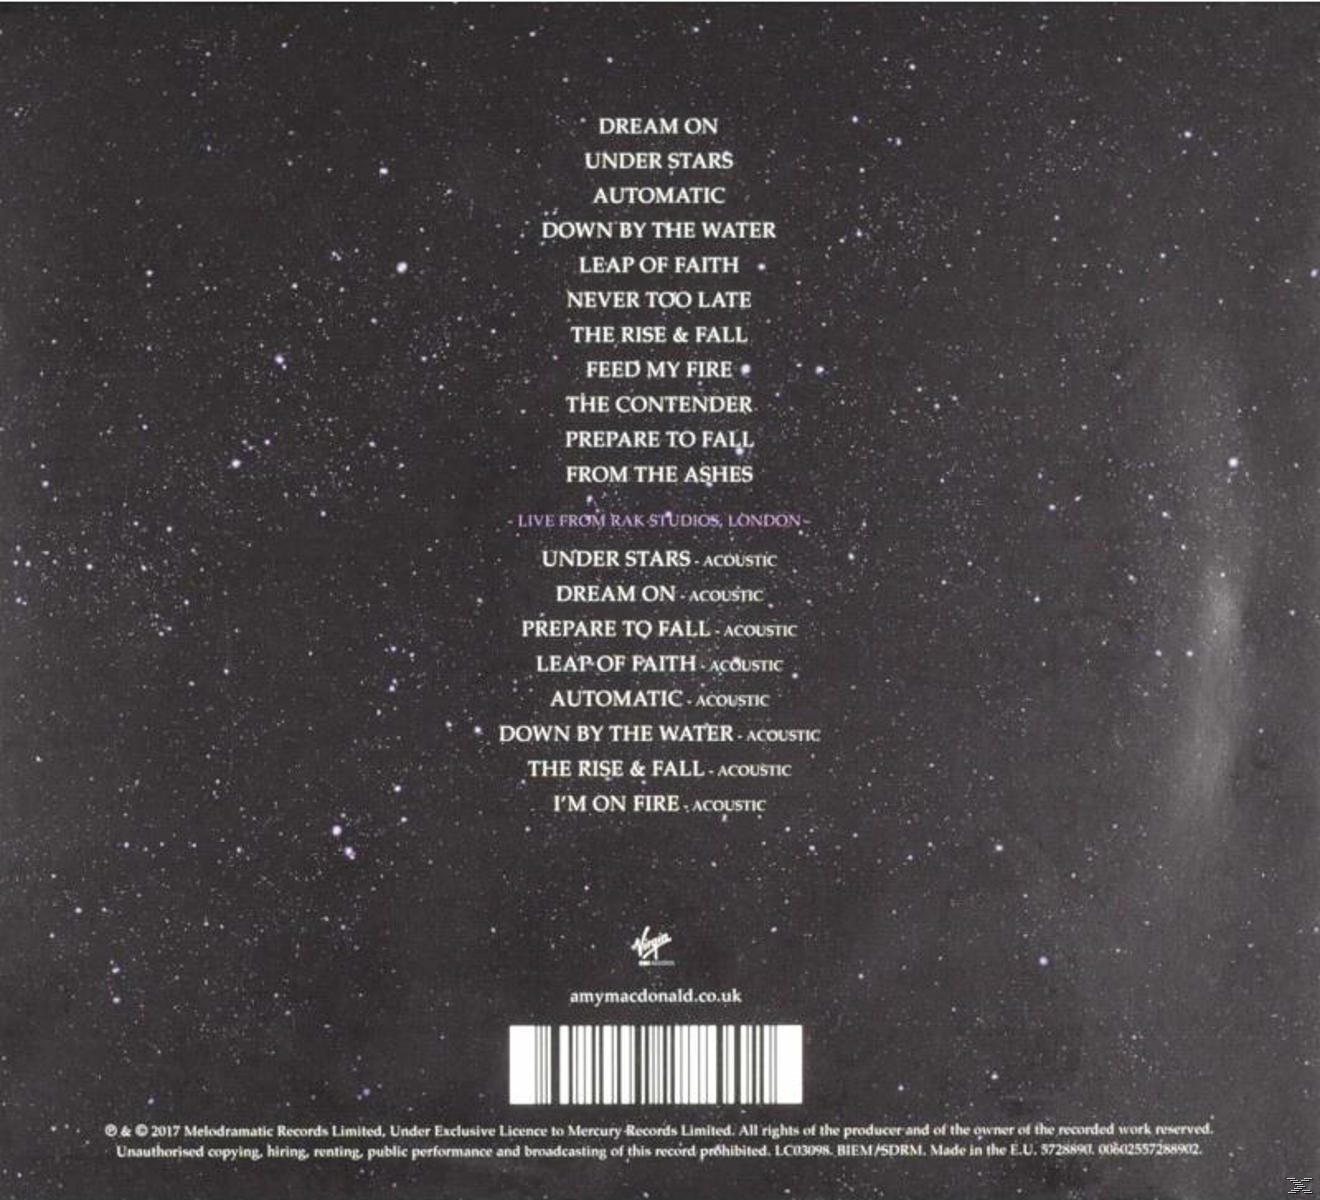 - Edition (CD) MacDonald Stars Under 8 Bonus-Tracks) Amy (Deluxe - mit